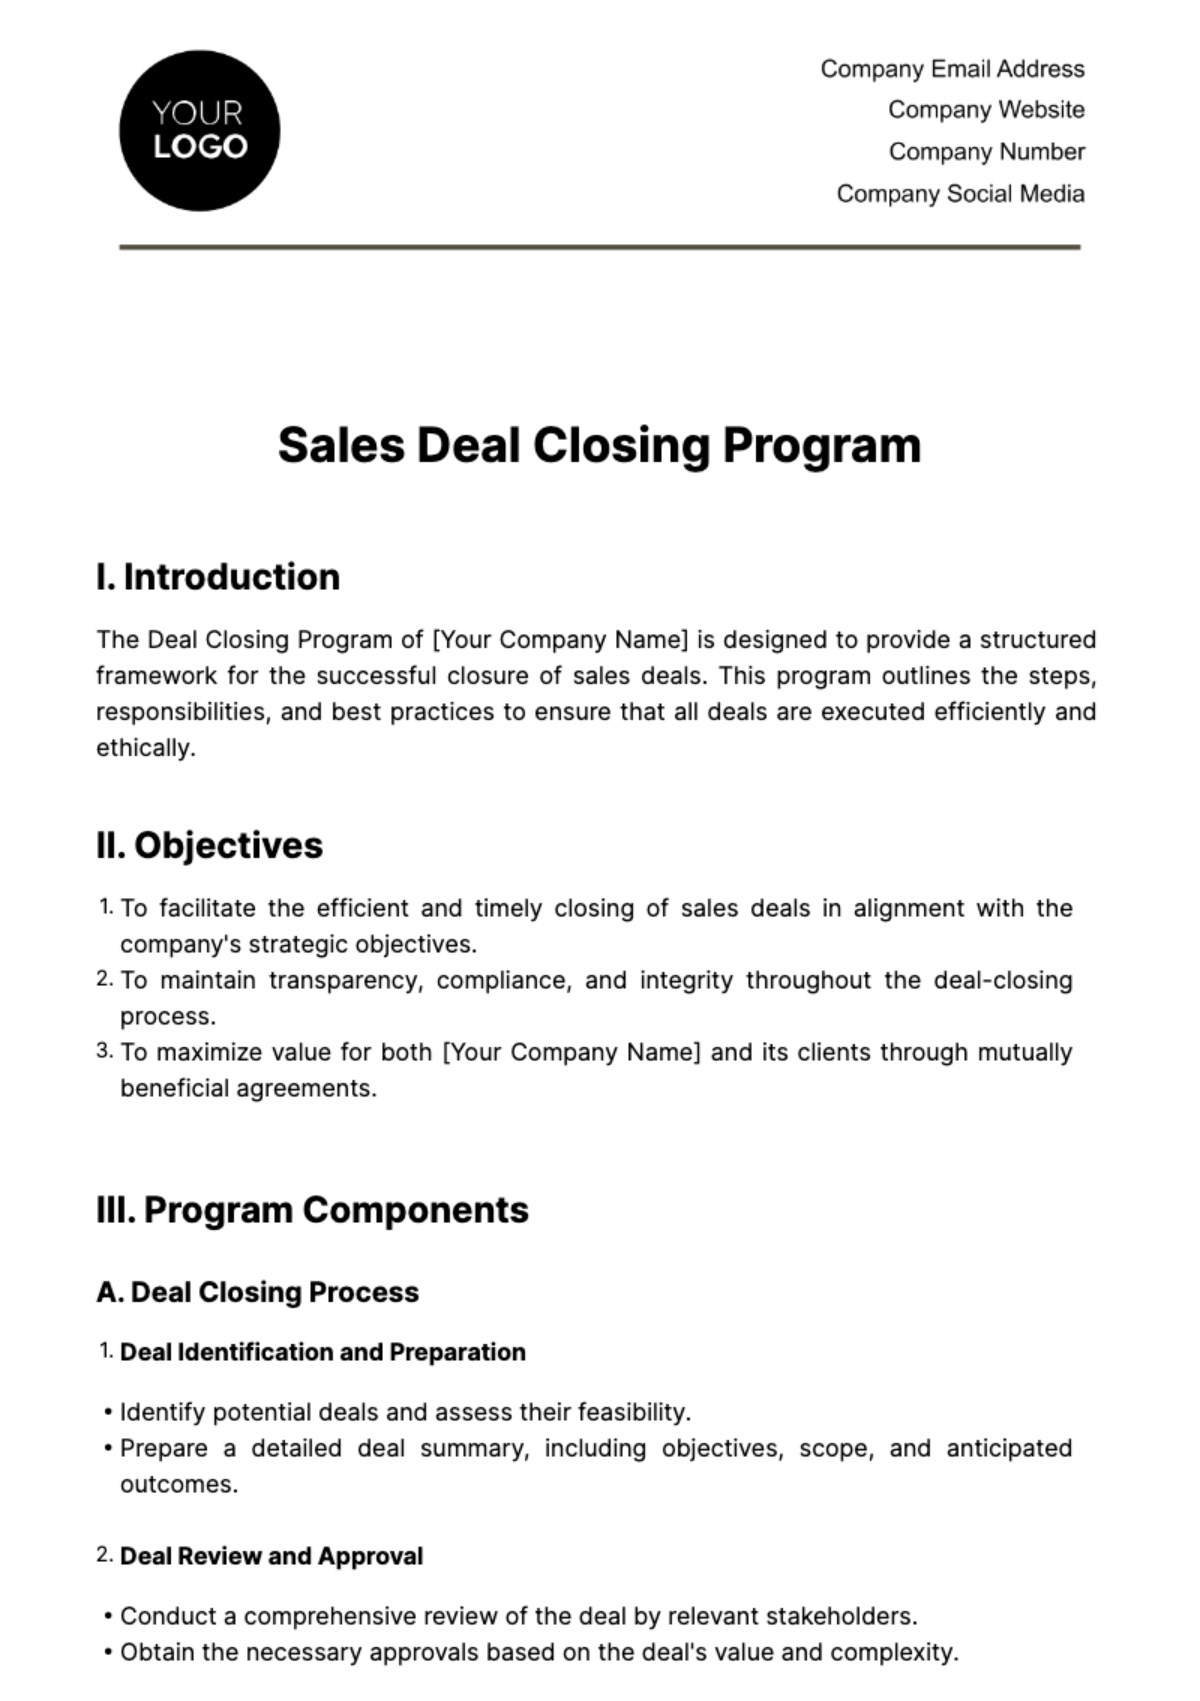 Sales Deal Closing Program Template